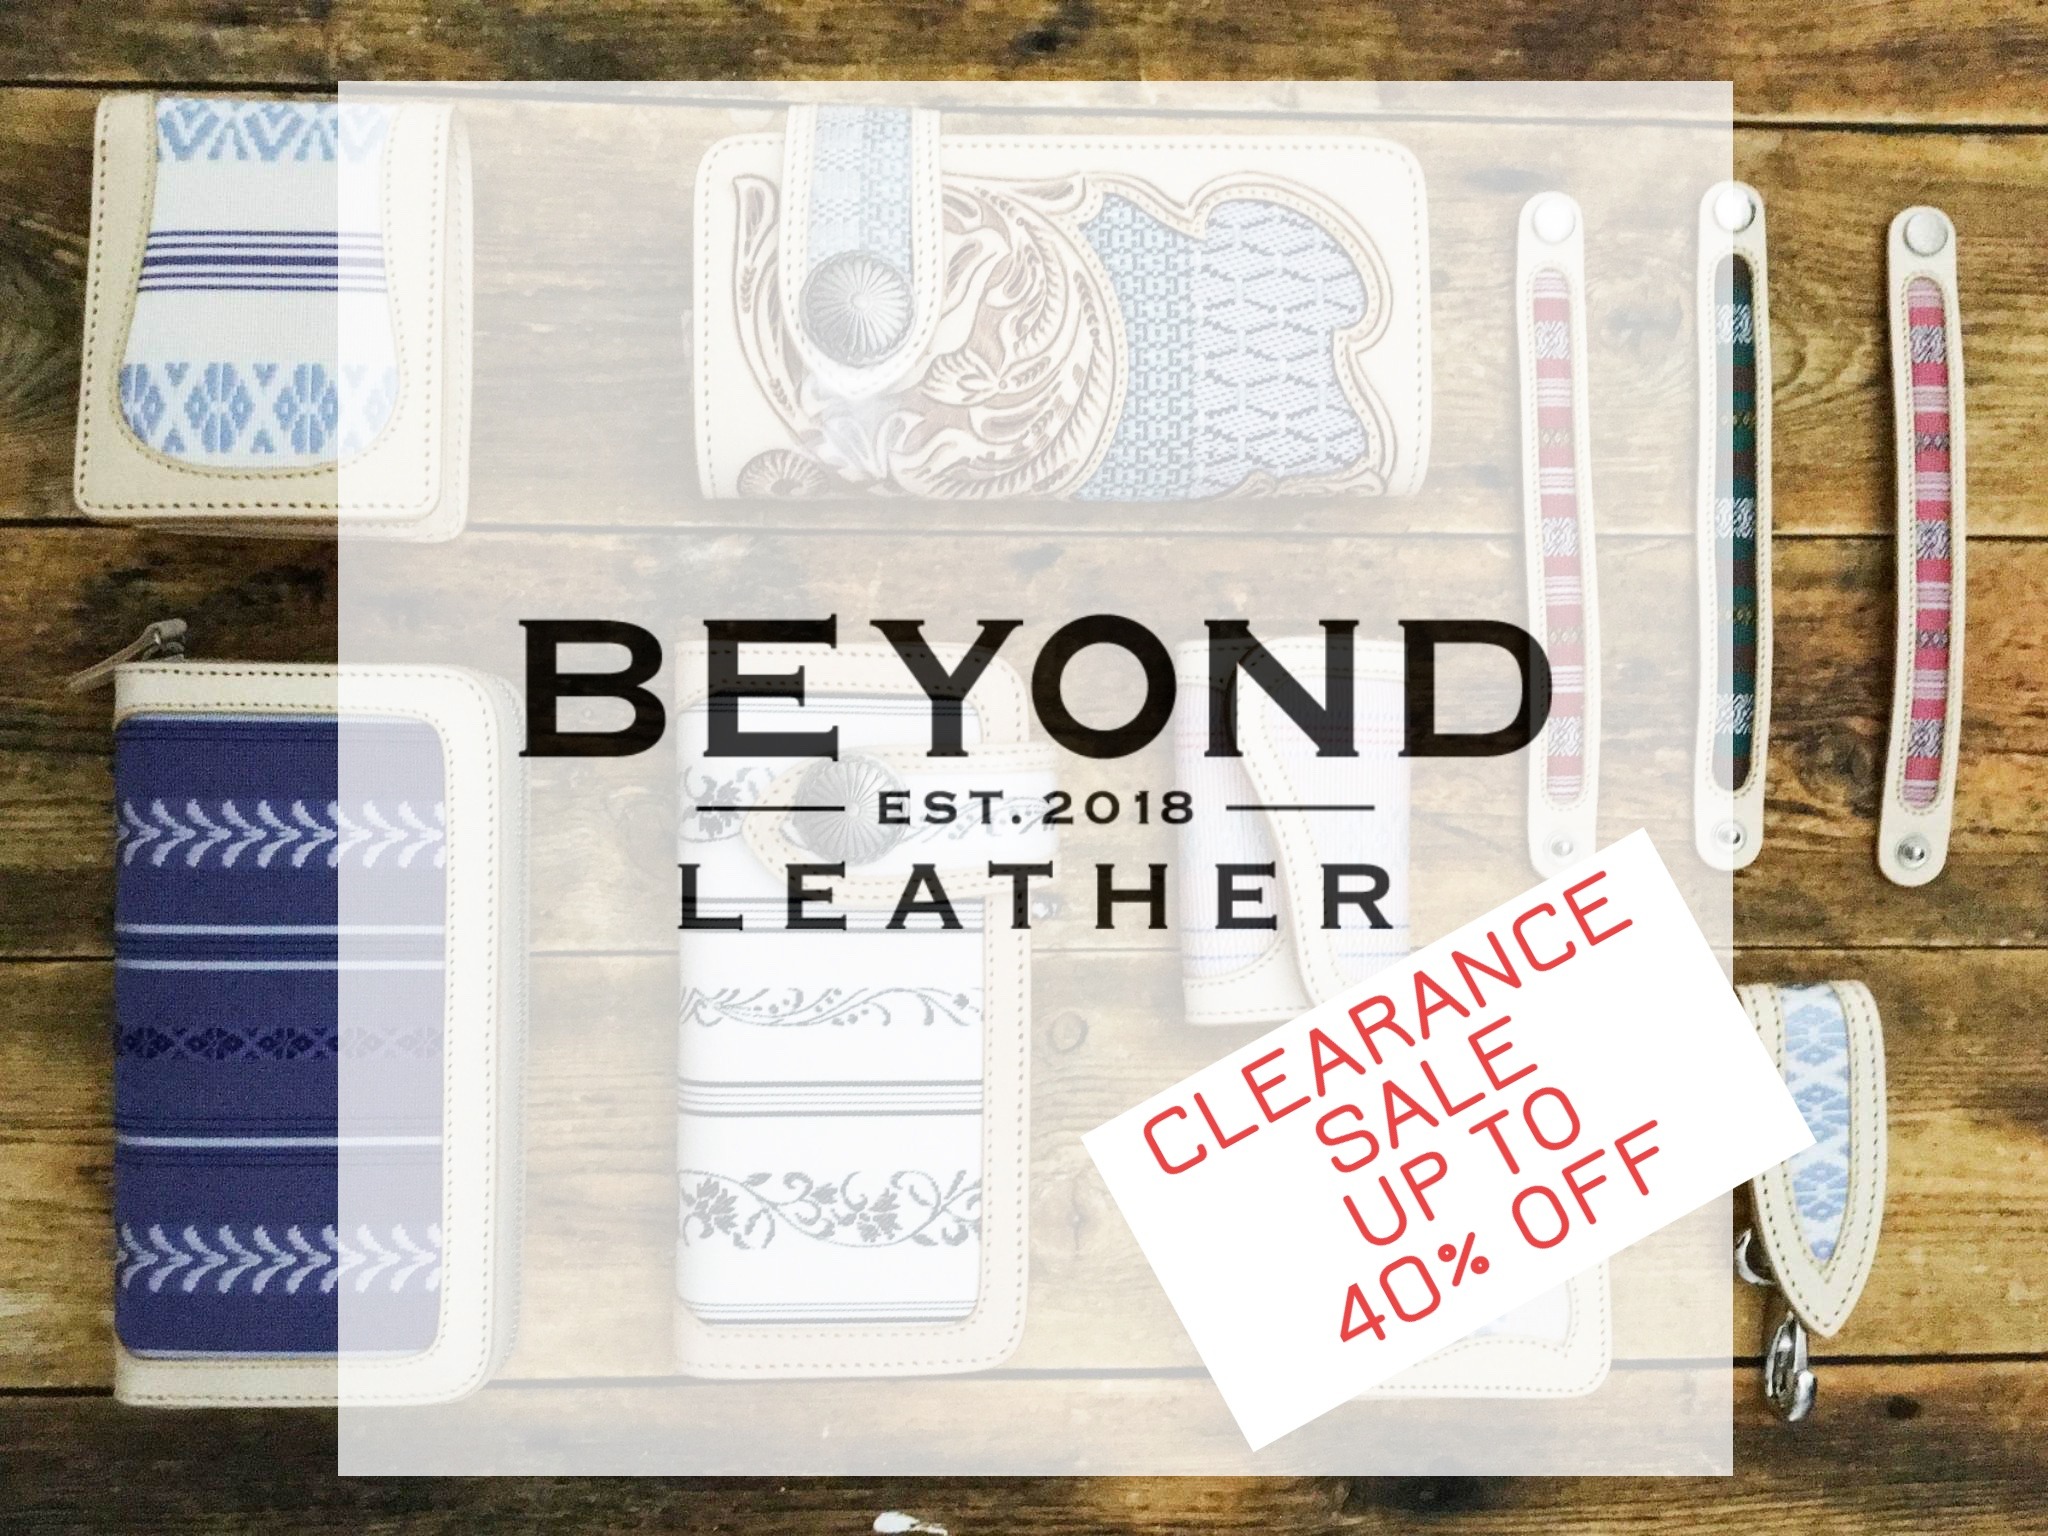 Beyond leather